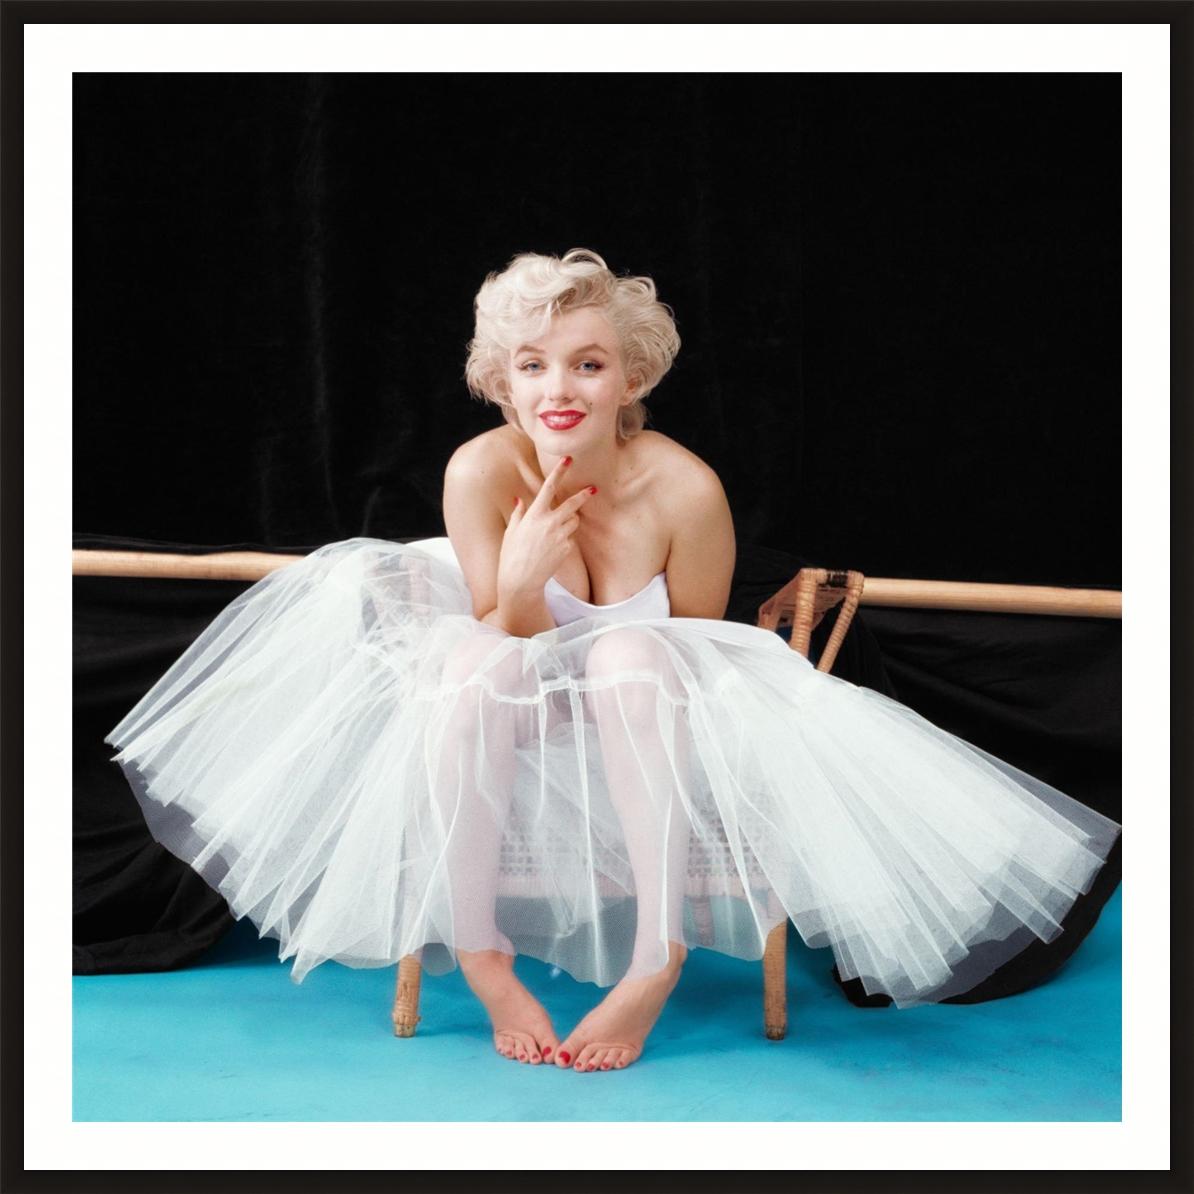 Marilyn Monroe, 